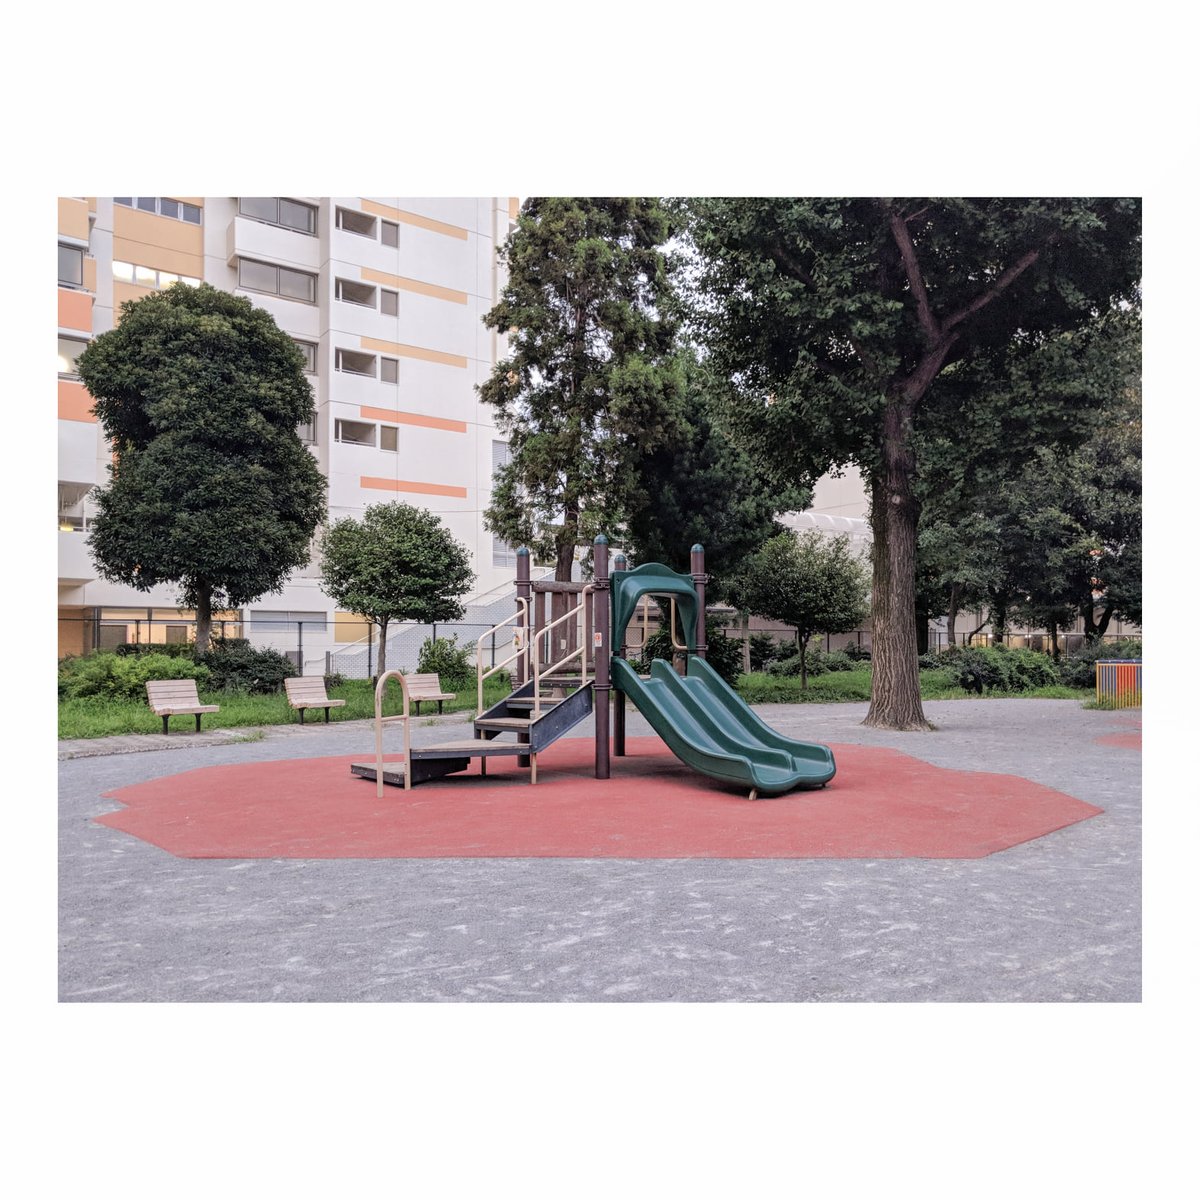 habitat

#playground #play #slide #natureinthecity #urbanjungle #urban #urbanlandscape #urbanphotography #documentingspace #Tokyo #Japan #tokyojapan #ig_tokyo #東京 #日本 #newtopographics #minimal #urbanminimalism #neighborhood #photography #fotografia #city #città #giappone #art